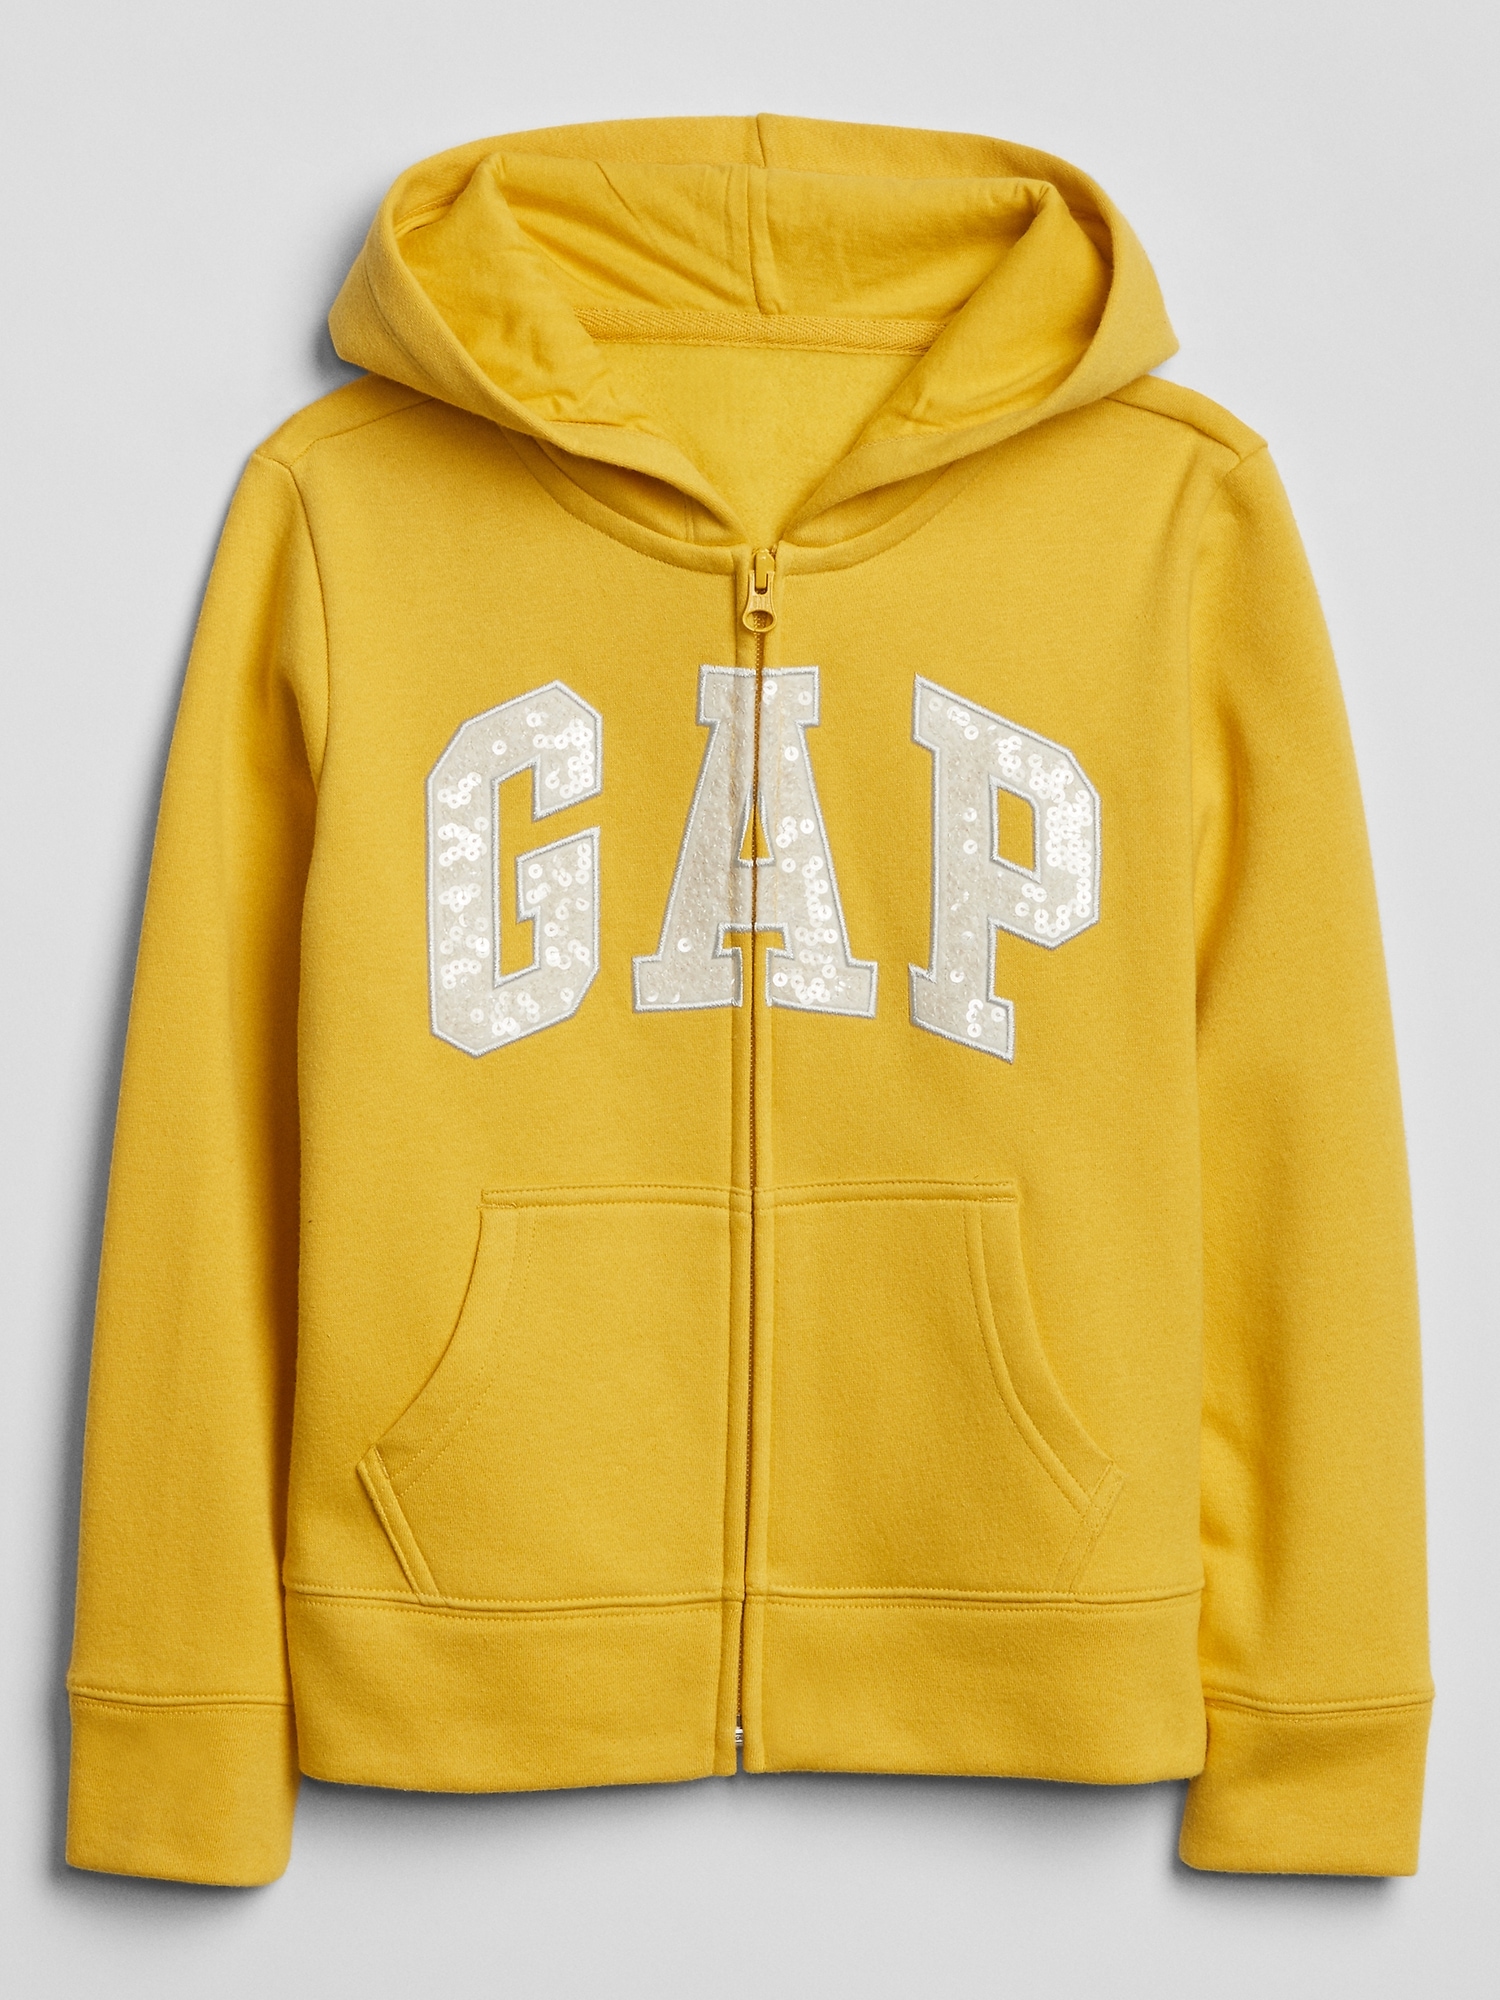 yellow gap sweatshirt